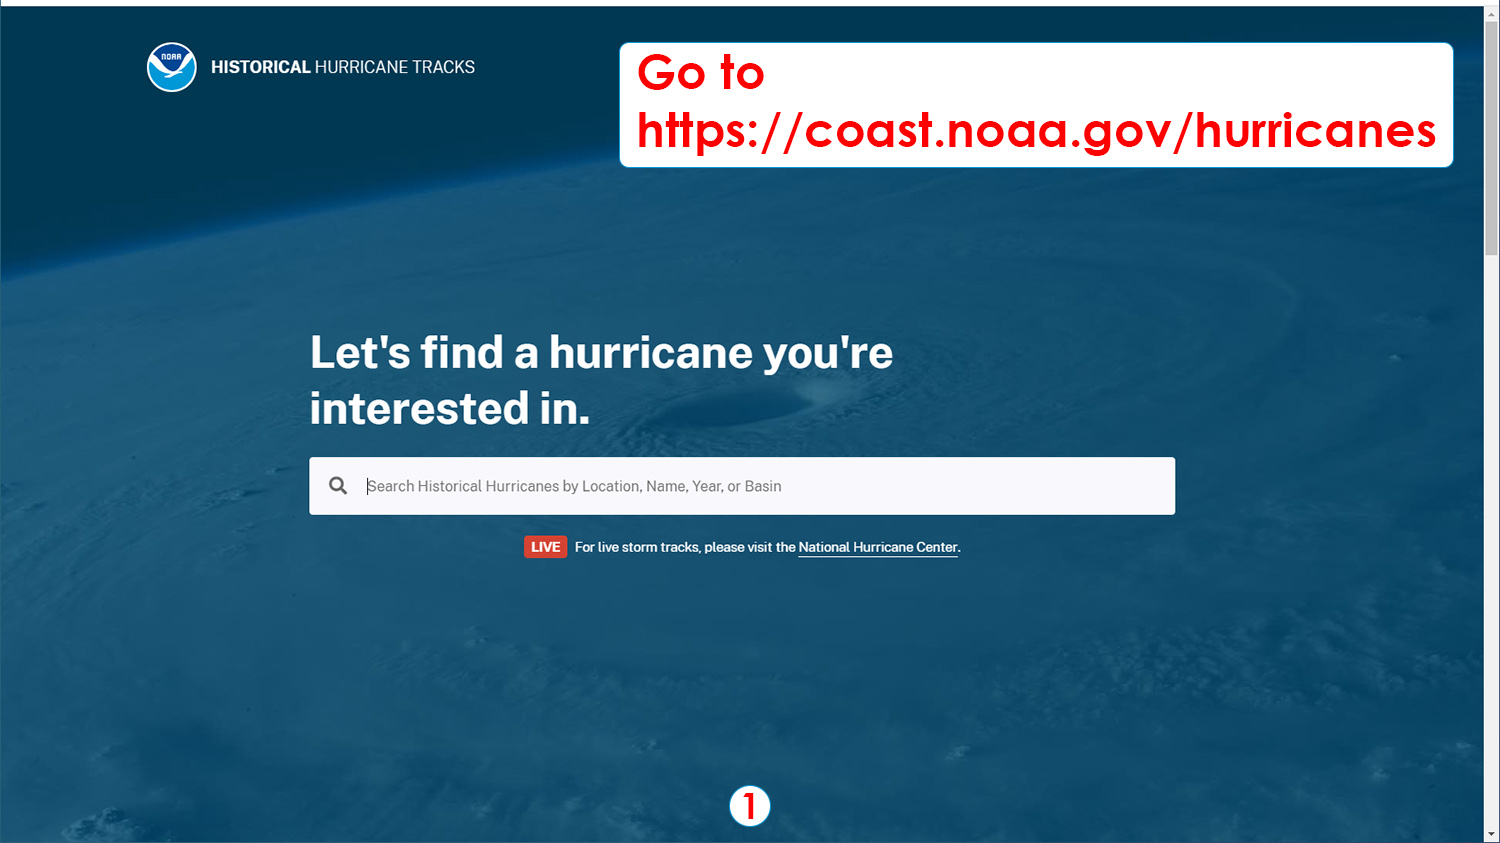 Step 1: Go to https://coast.noaa.gov/hurricanes.